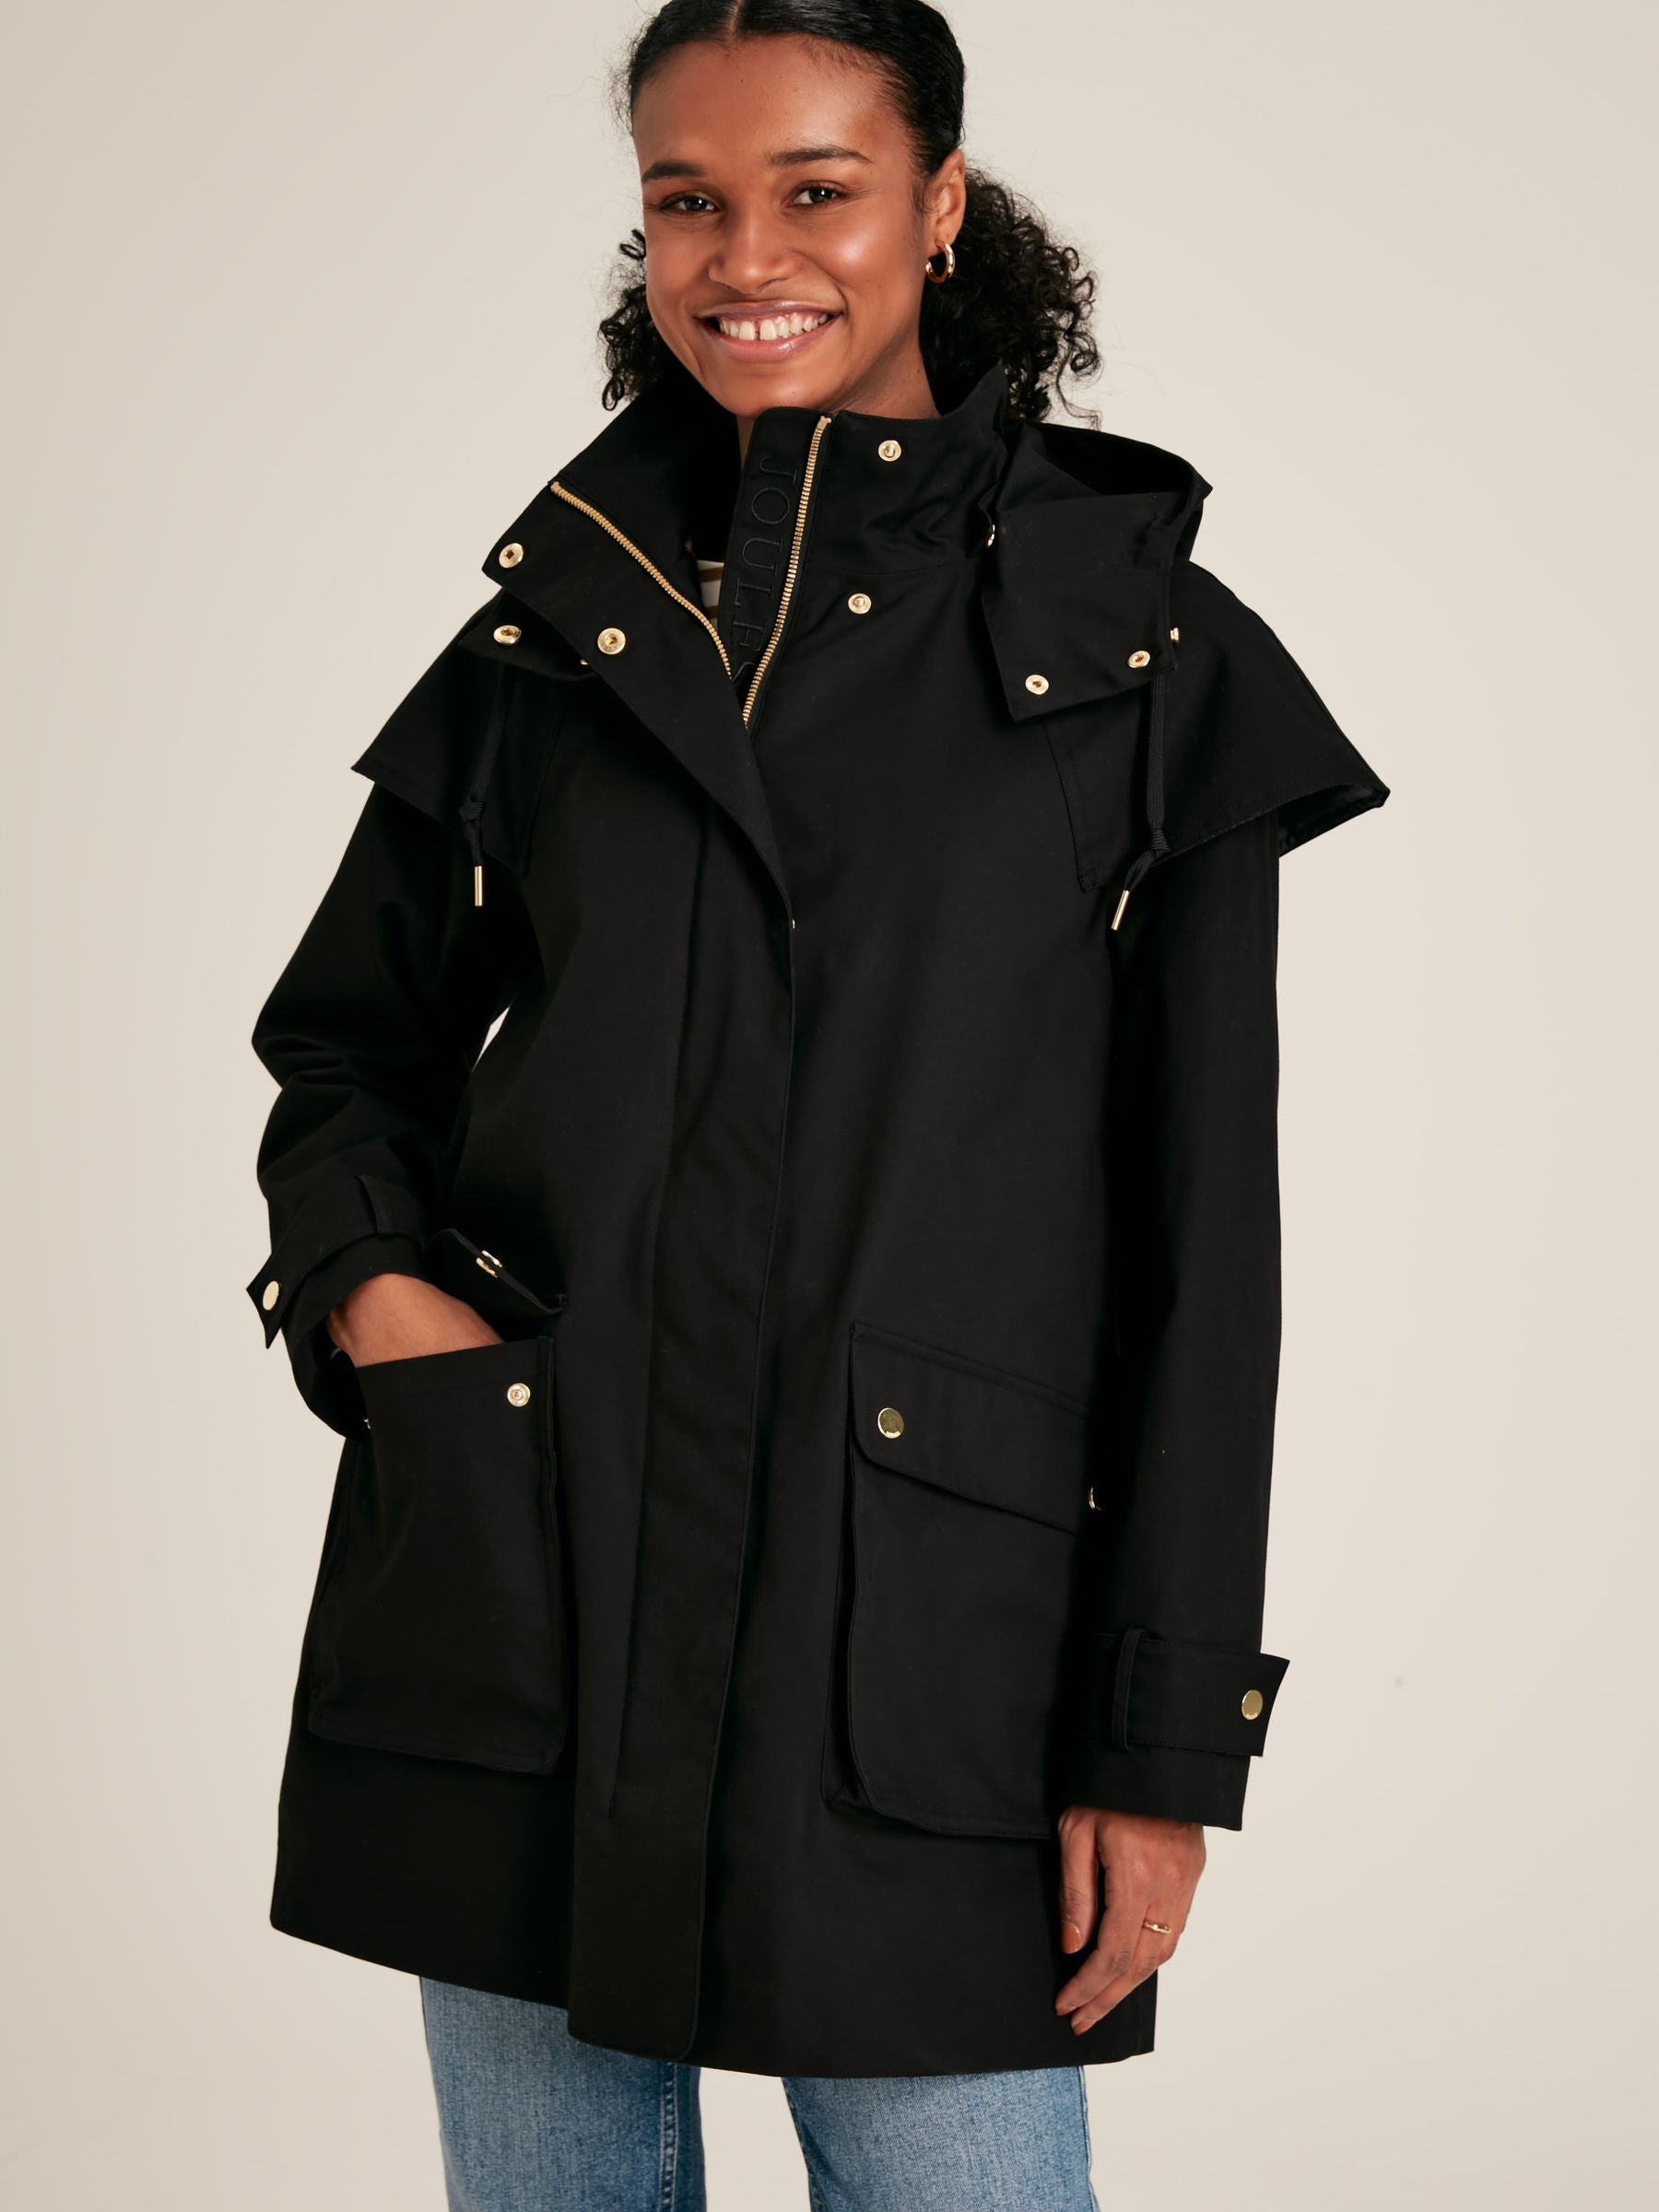 Edinburgh Black Waterproof Hooded Raincoat With Cape